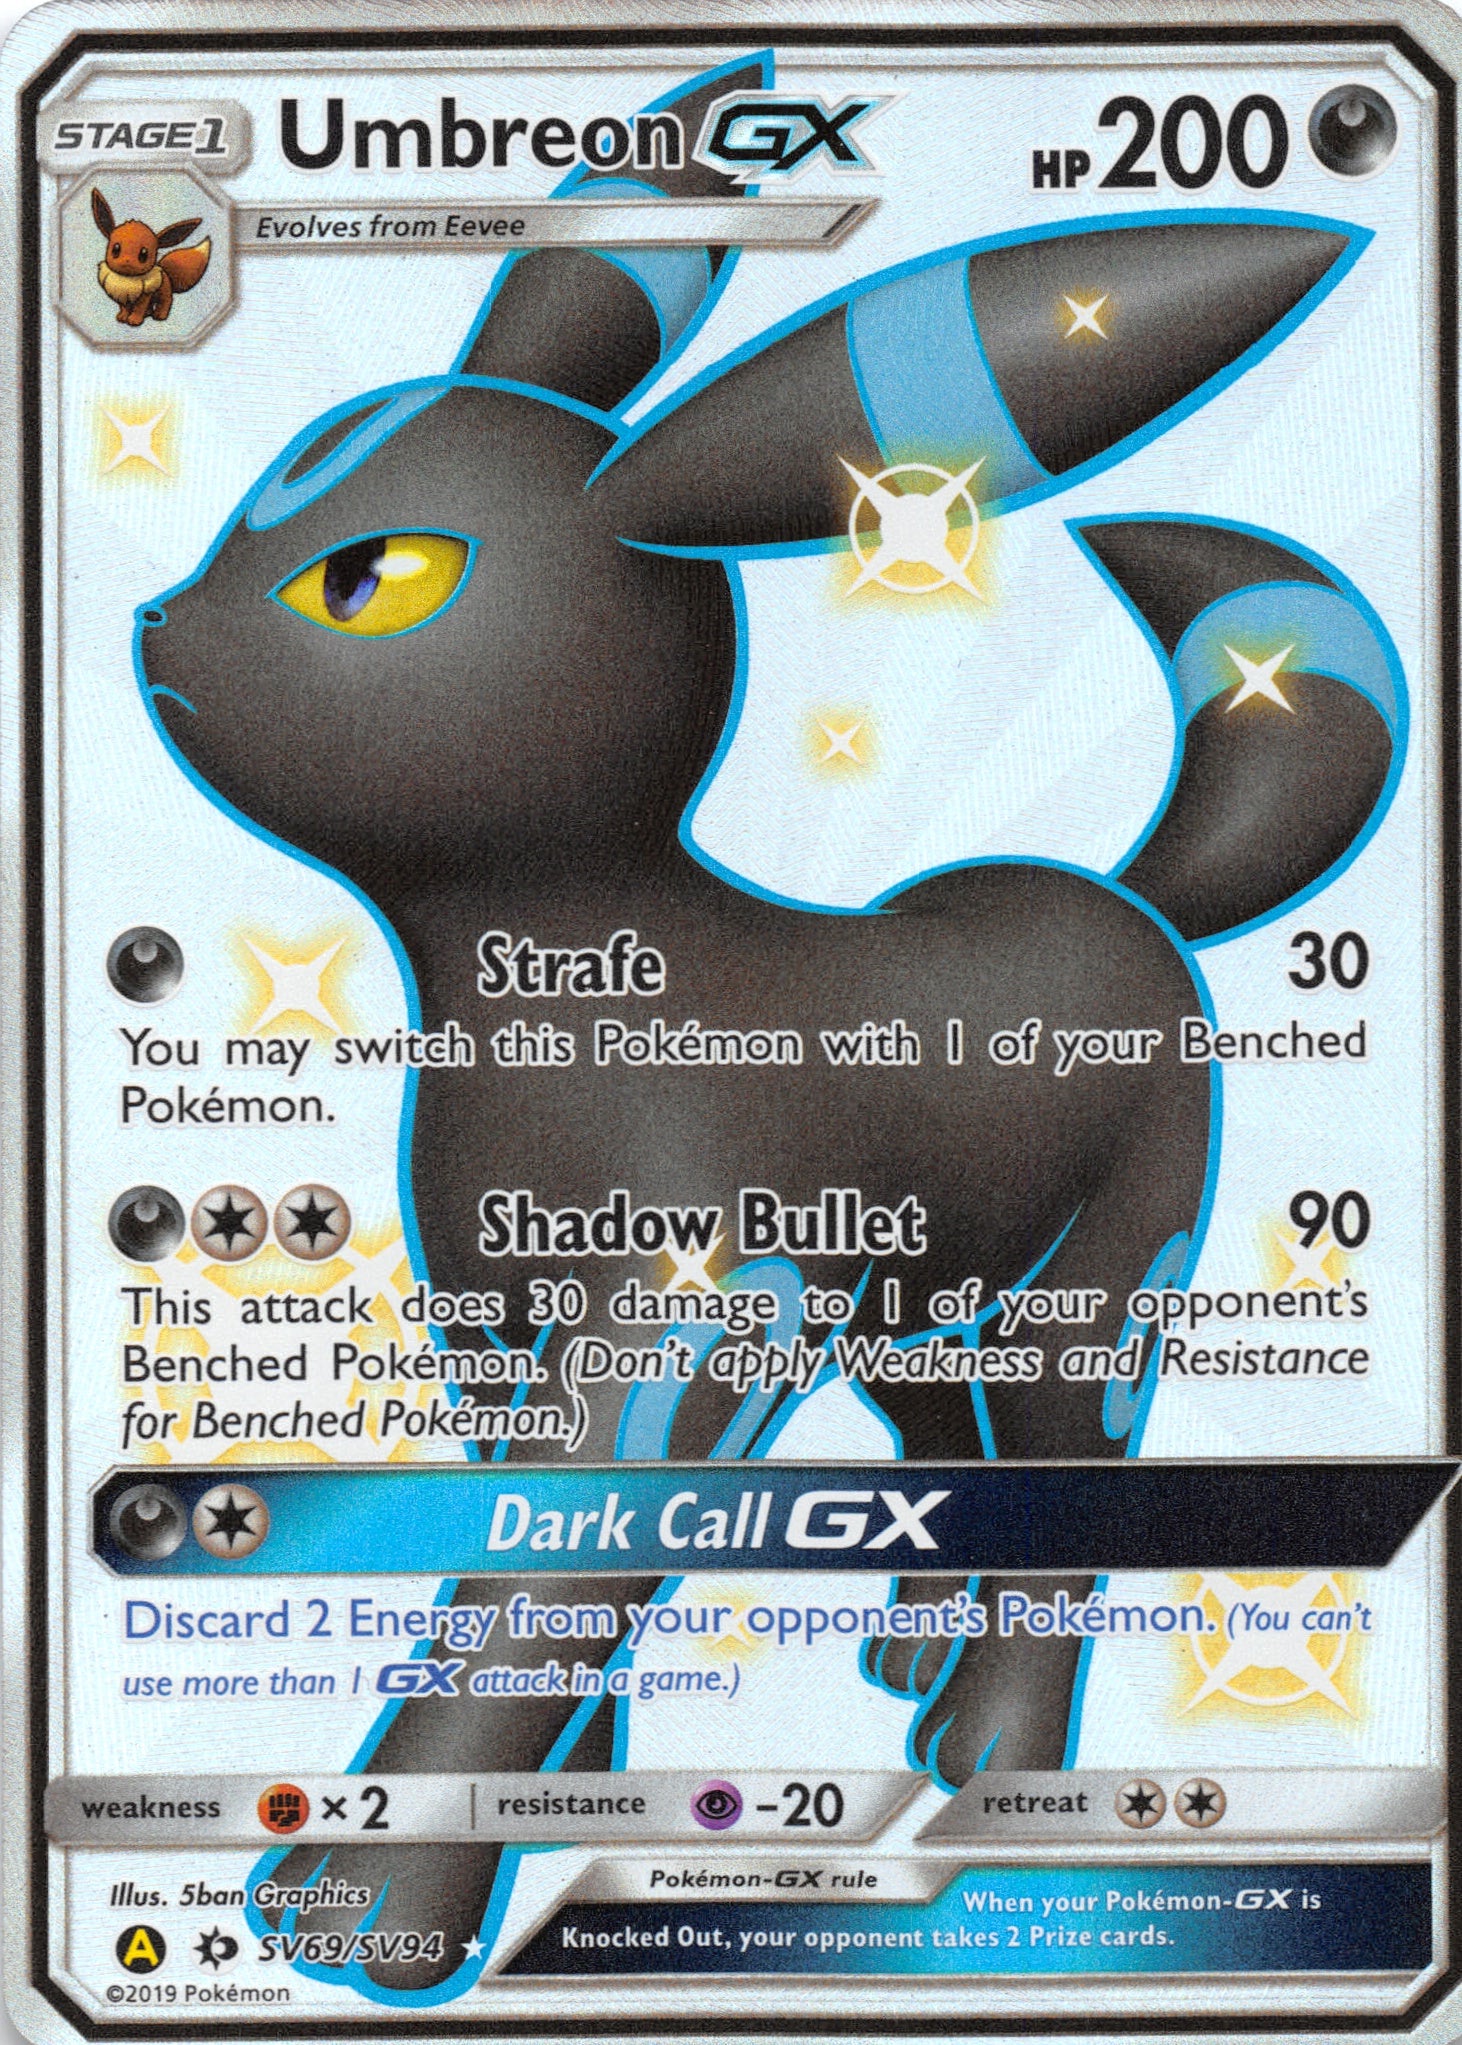 Articuno GX Full Art Shiny Holo Hidden Fates Pokemon Card SV54/SV94